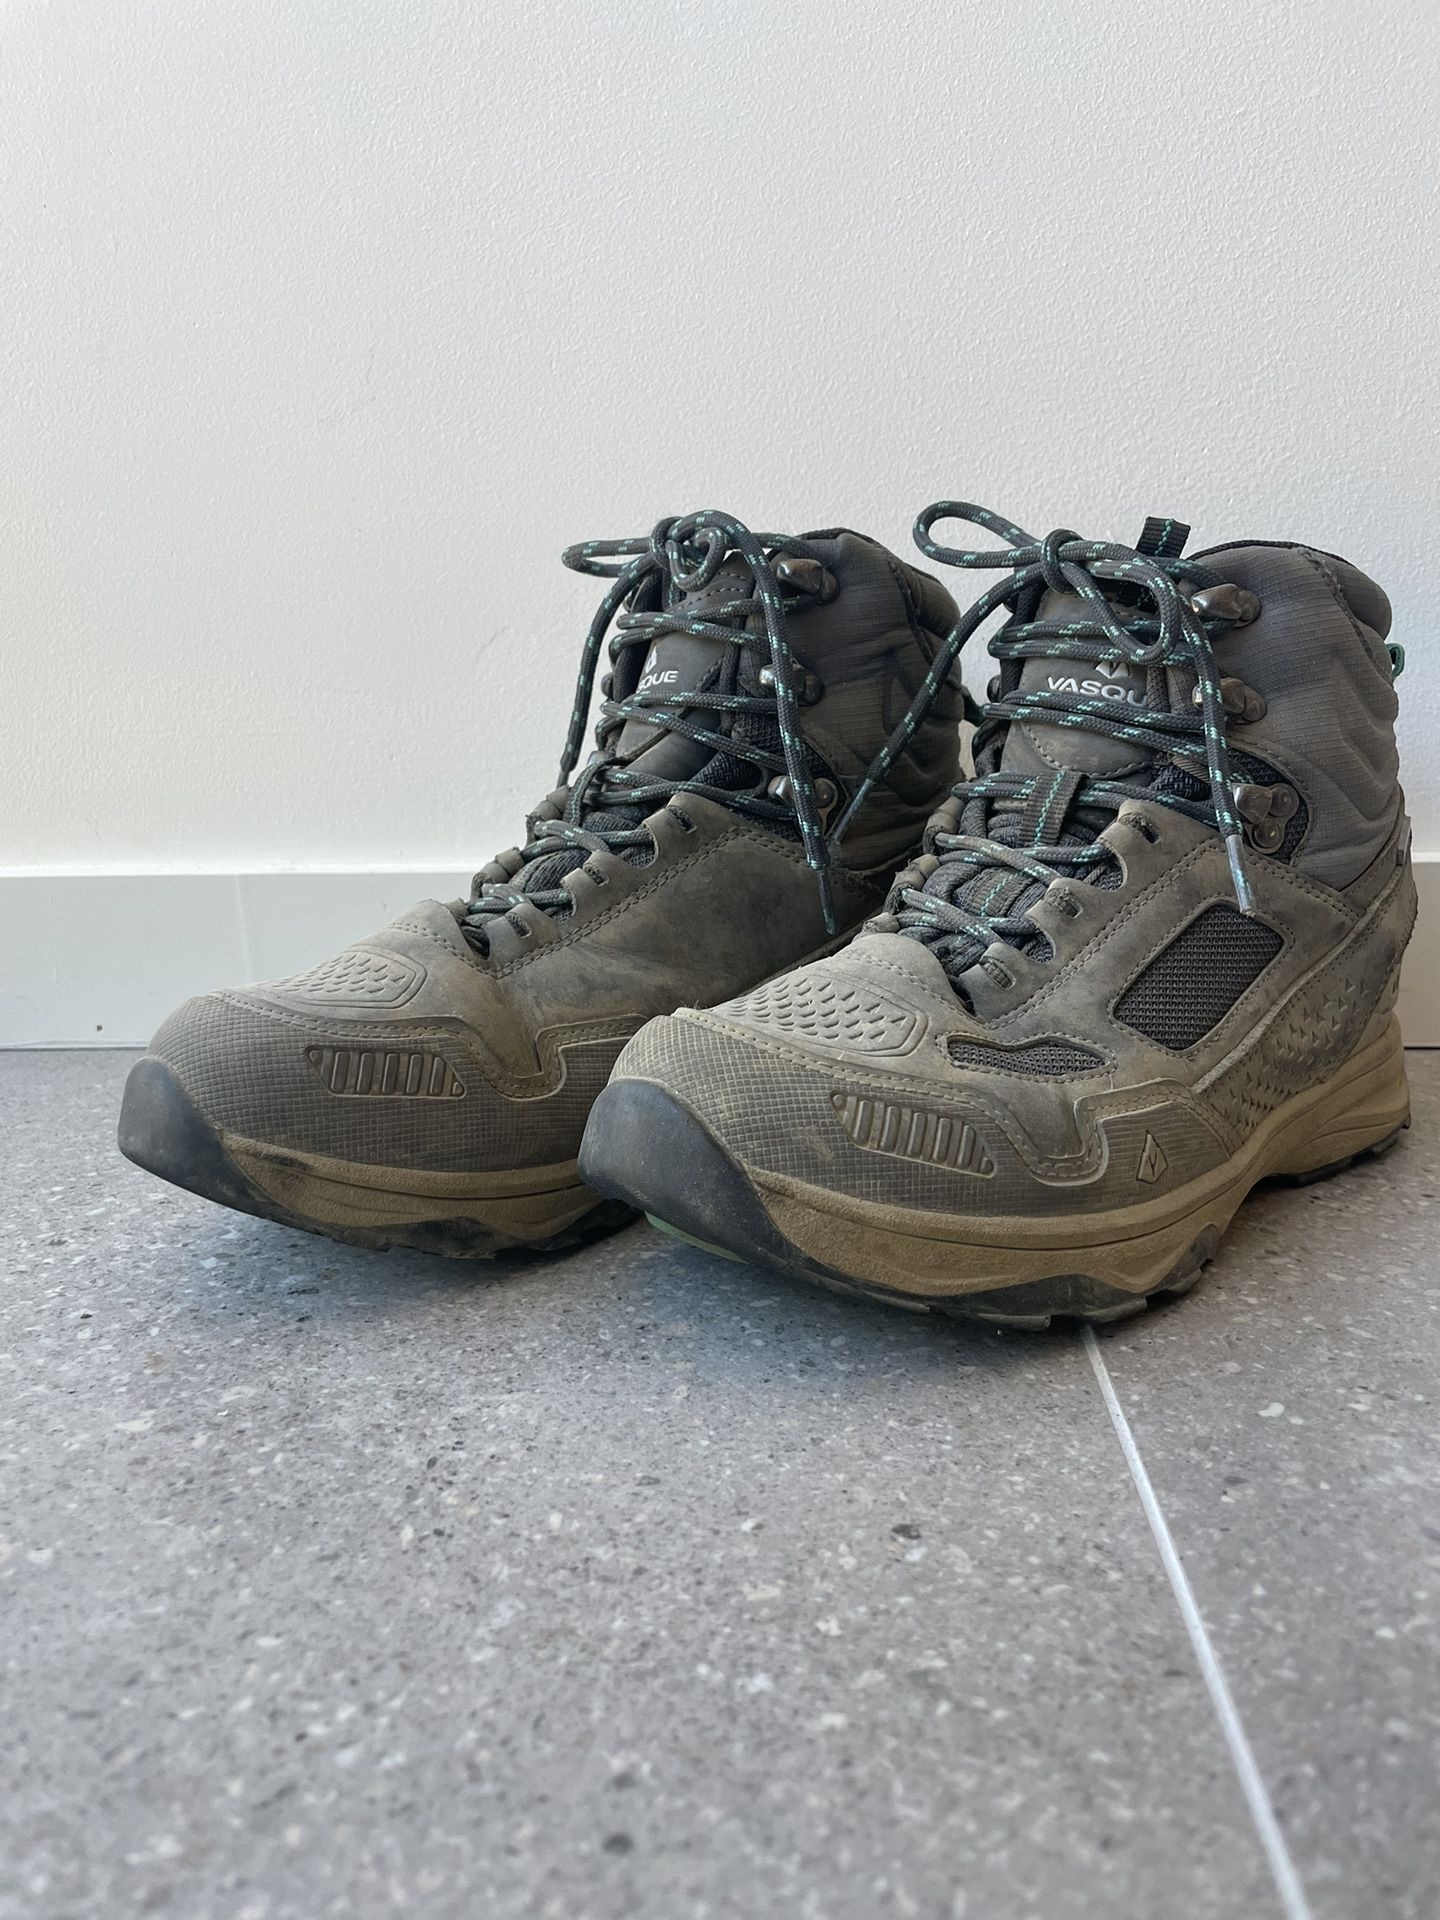 Vasque Men’s Hiking Boots - Like New!